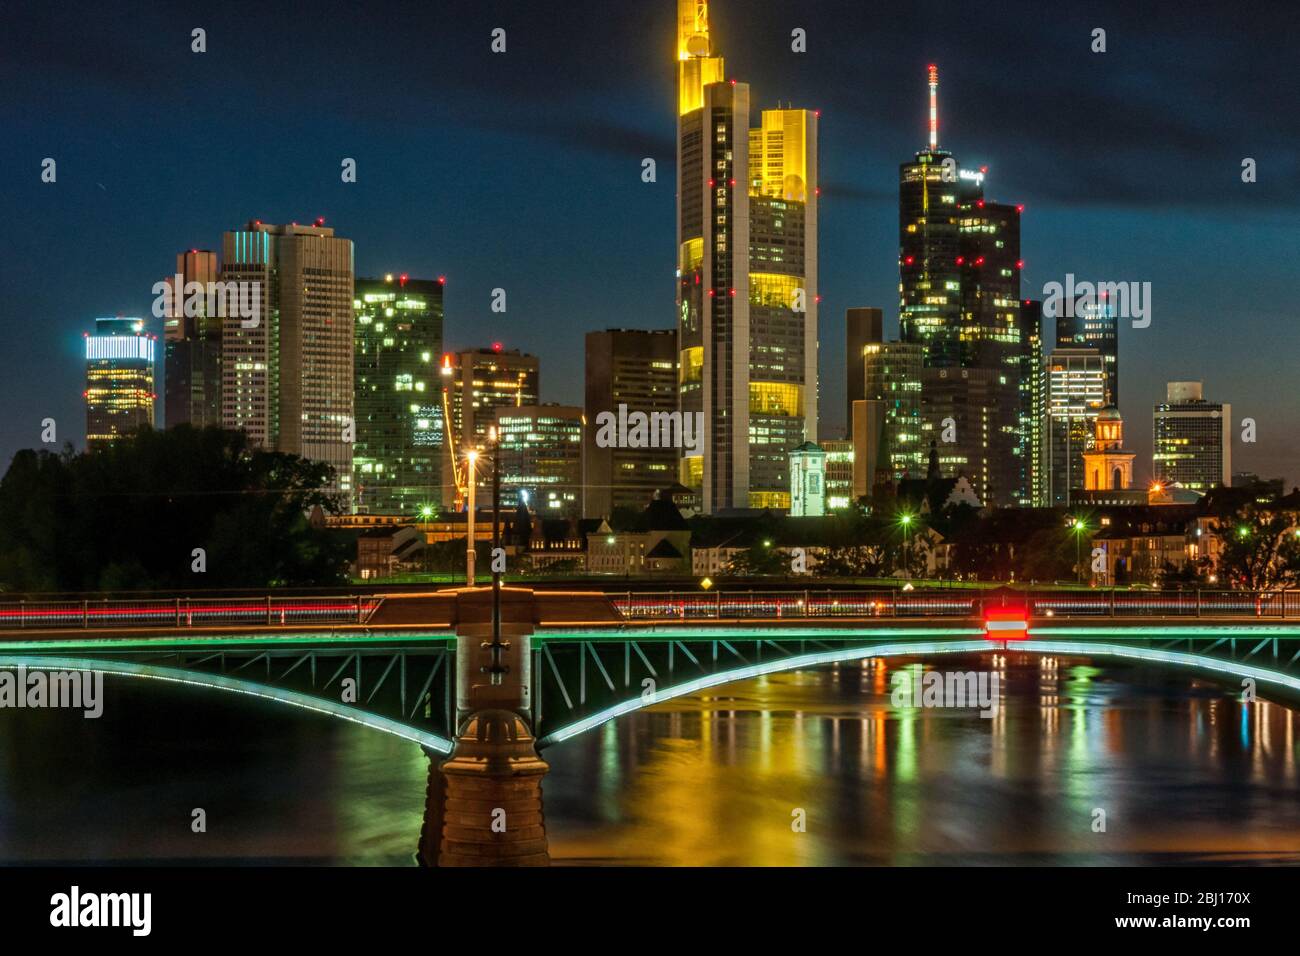 The Ignatz-Bubis bridge in Frankfurt am Main at night Stock Photo